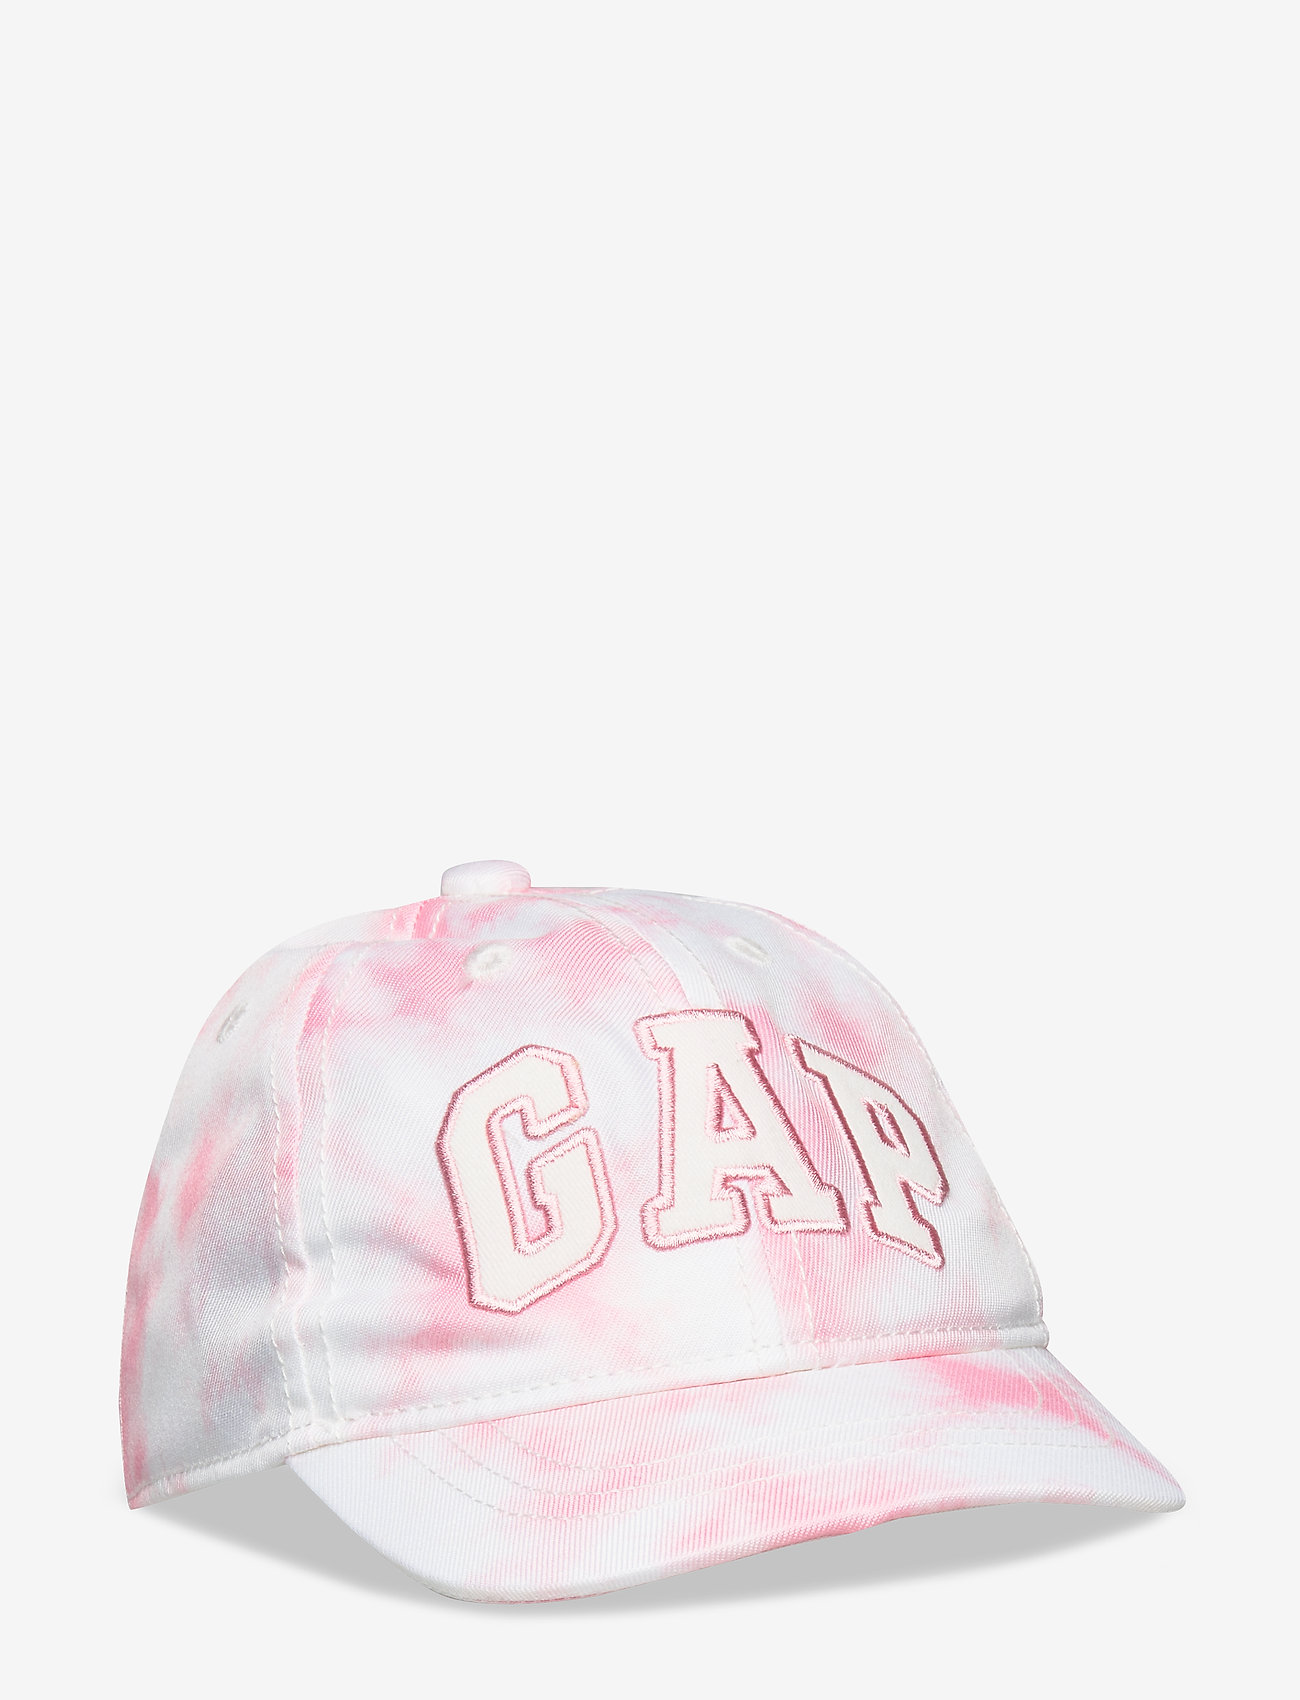 gap pink hat